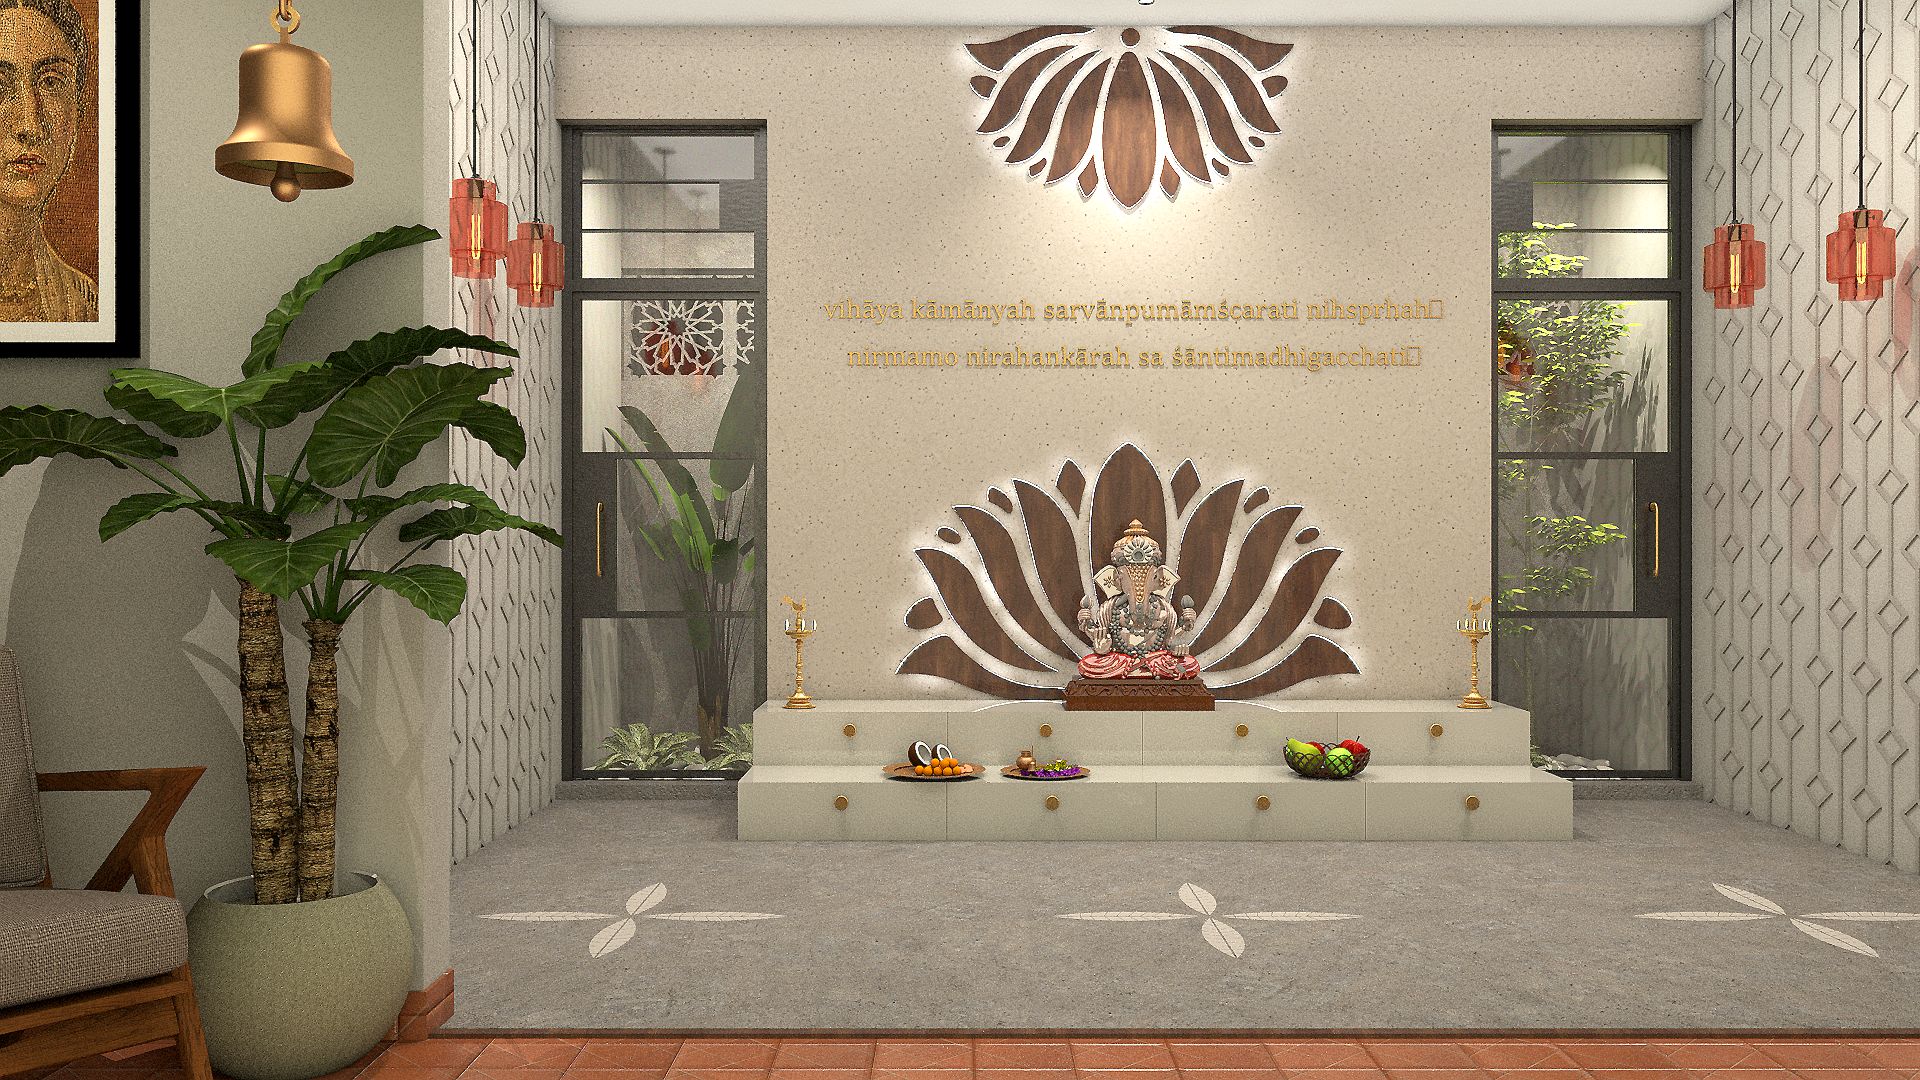 Puja Room Design